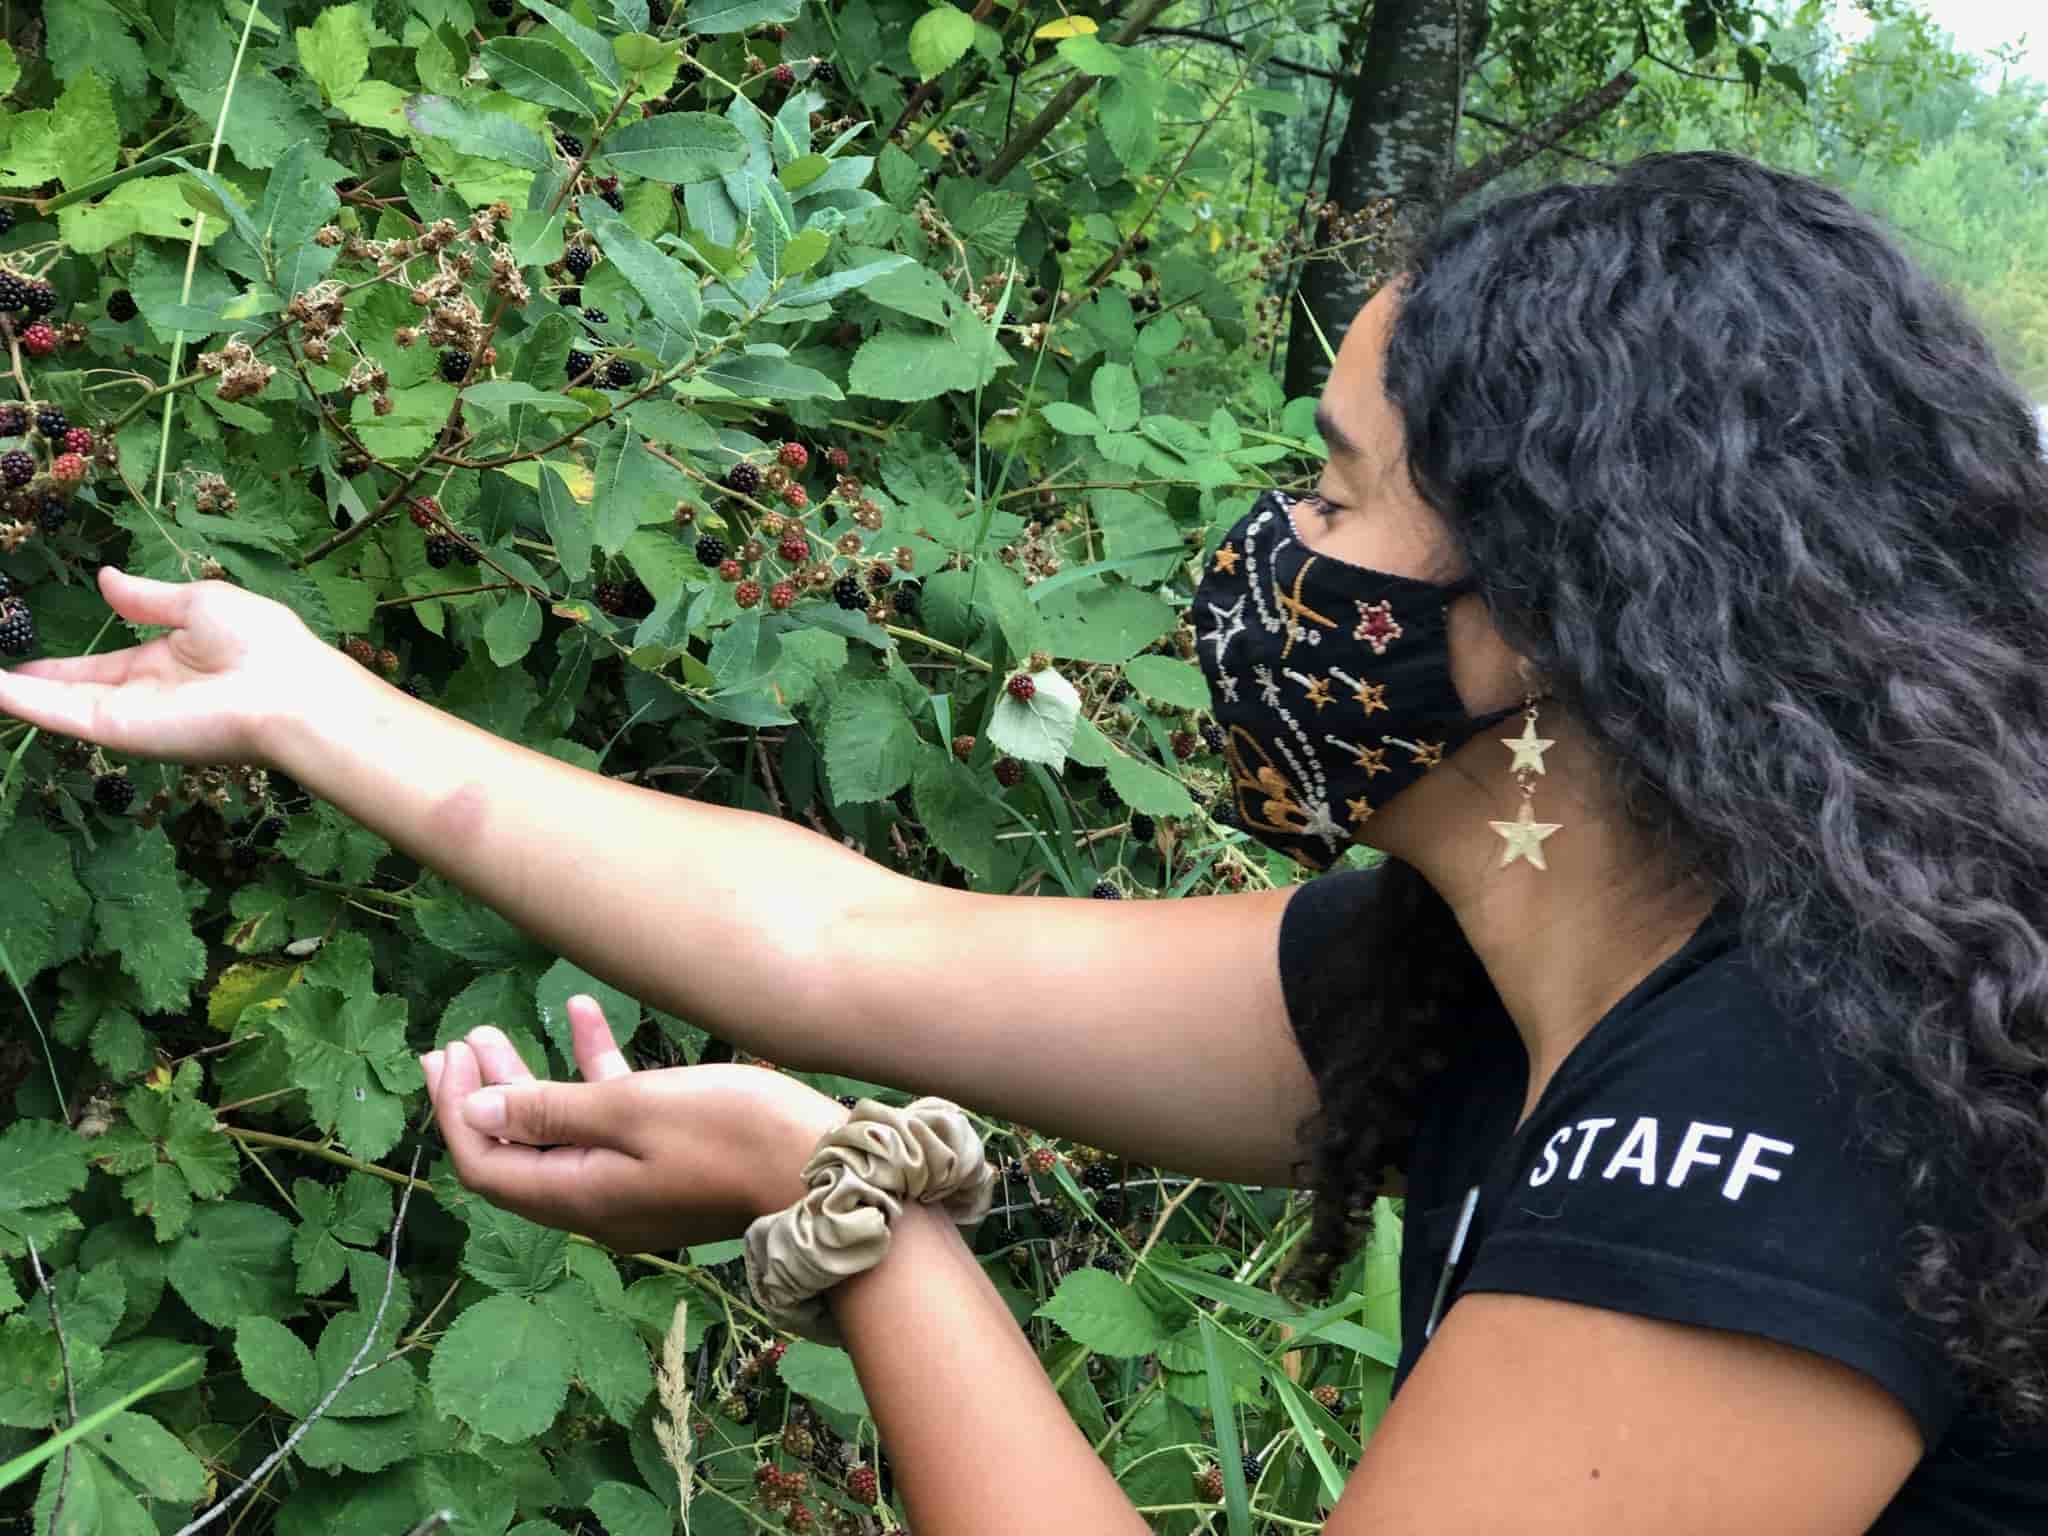 21 Acres staff member picks chemical-free blackberries on the farm.